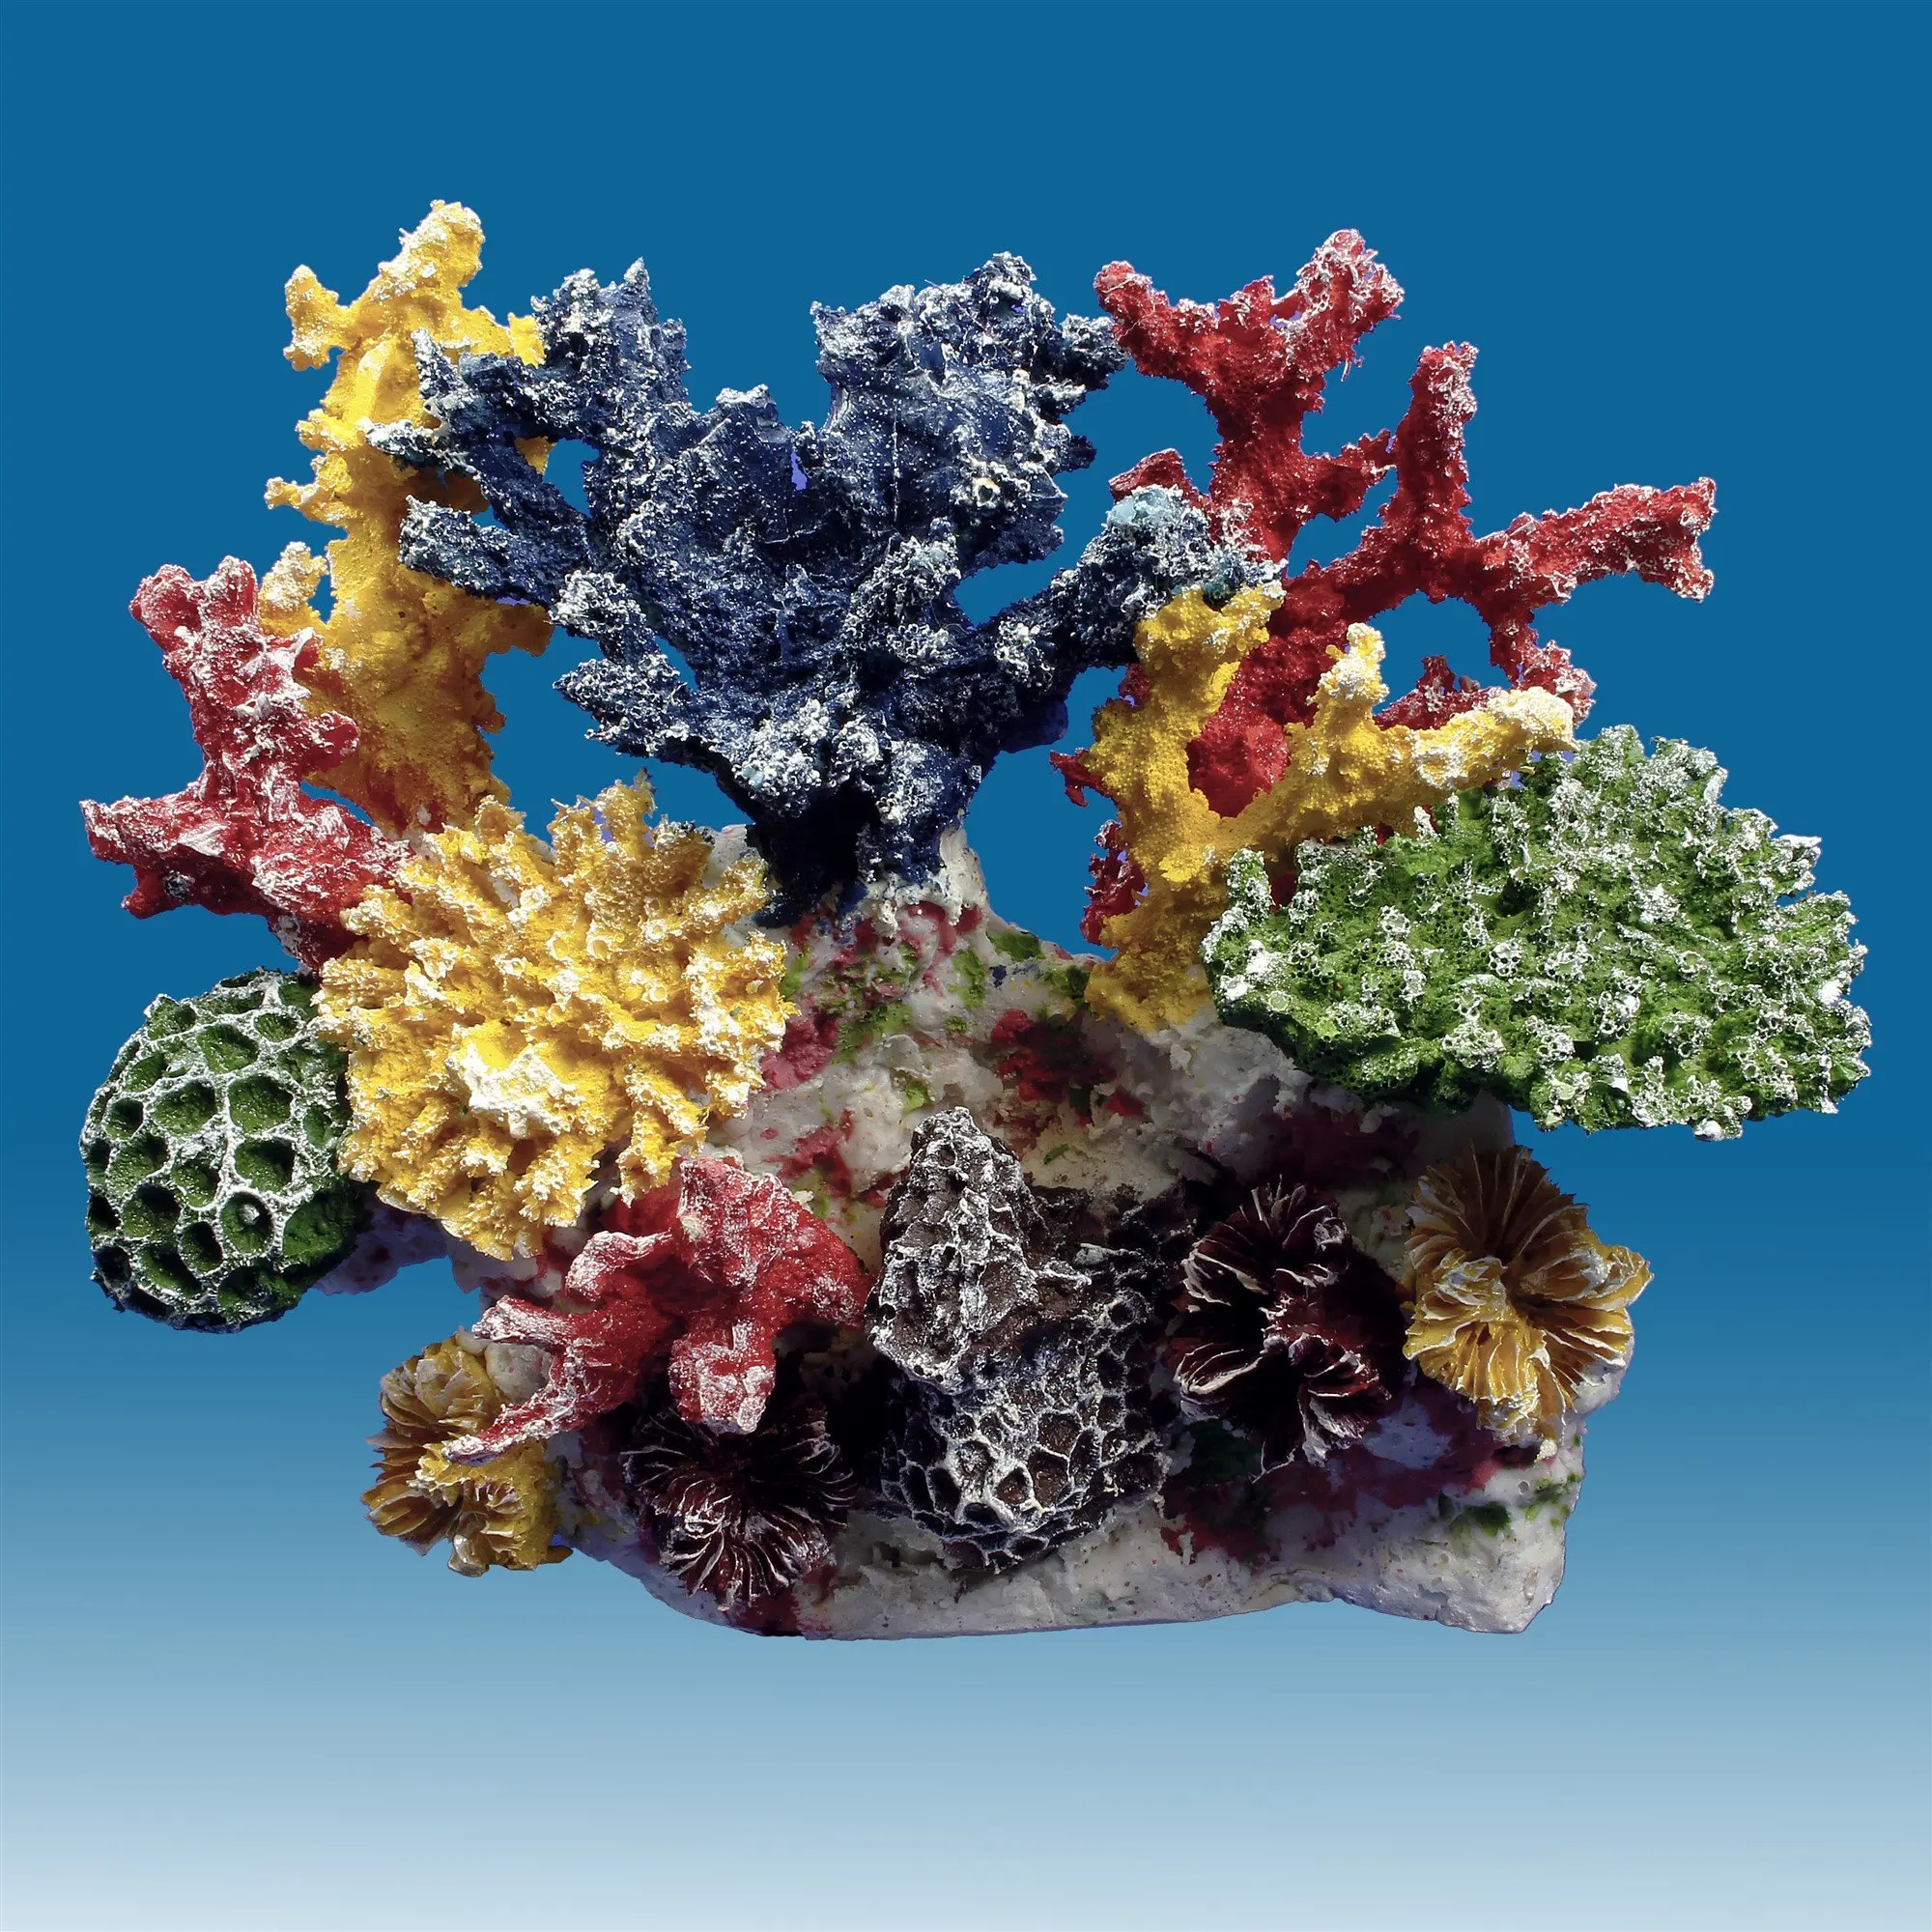 Buy Instant Reef Dm036 Artificial Coral Reef Aquarium Decor For